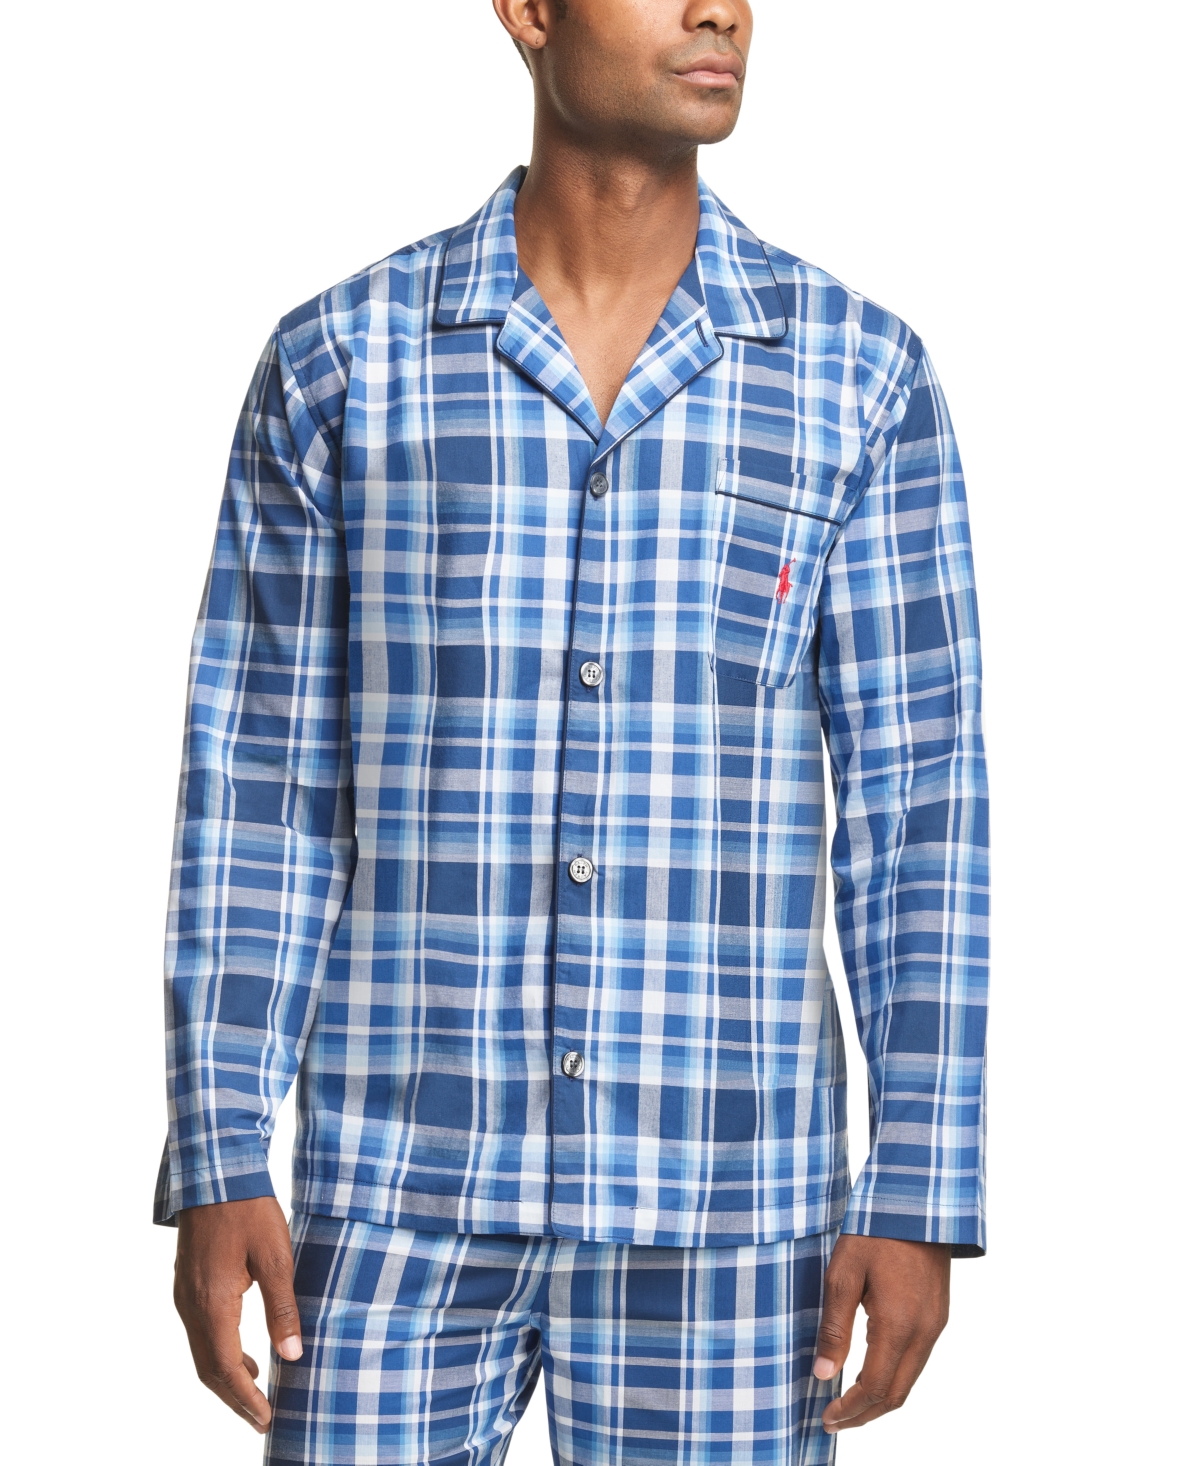 Men's Plaid Woven Pajama Top - Monroe Plaid